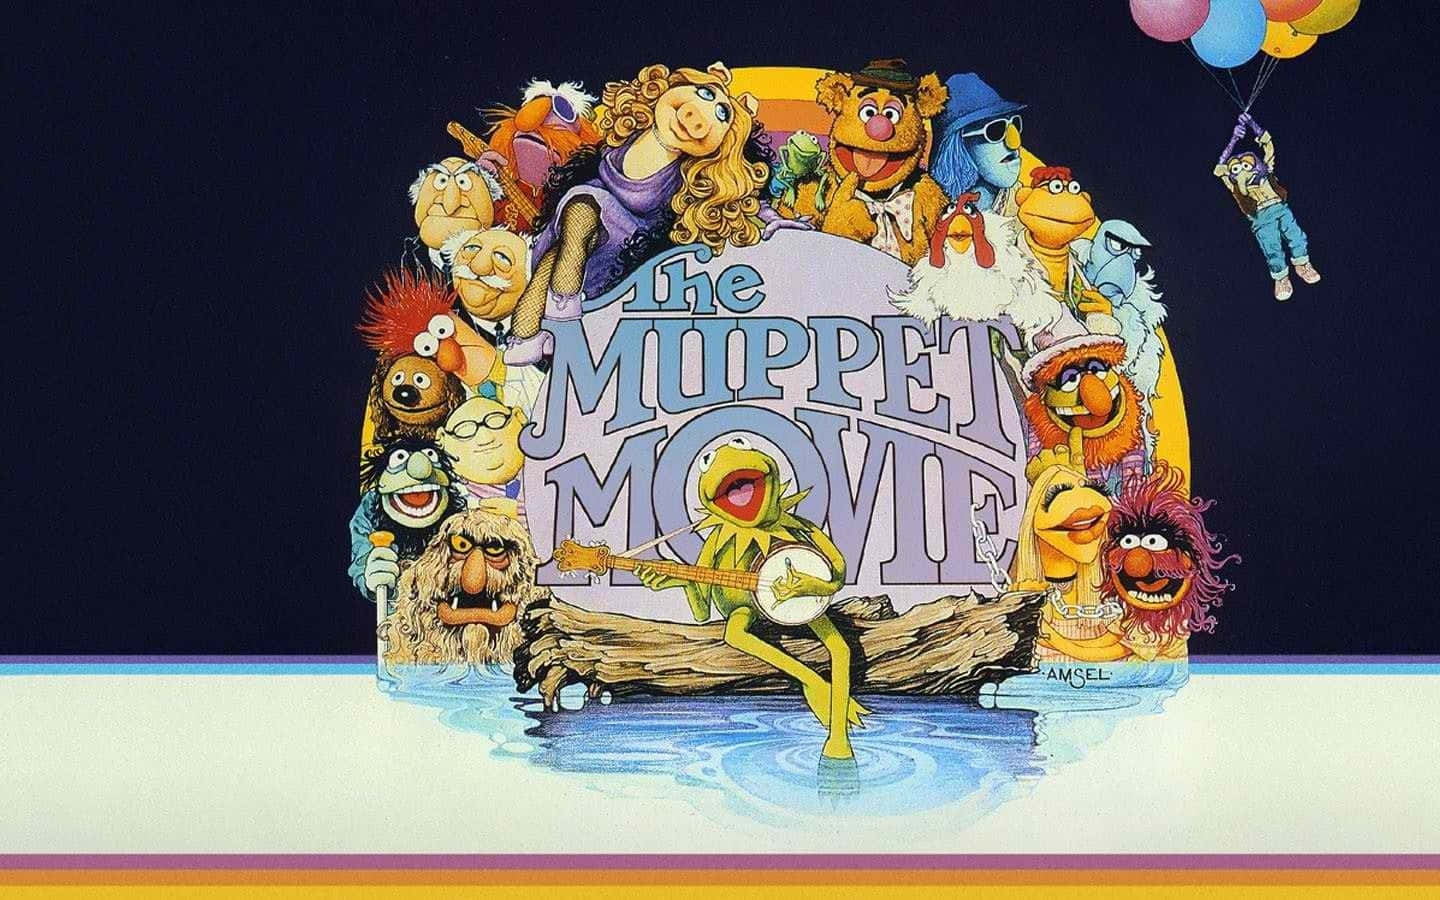 The Muppet Movie Poster Art Wallpaper